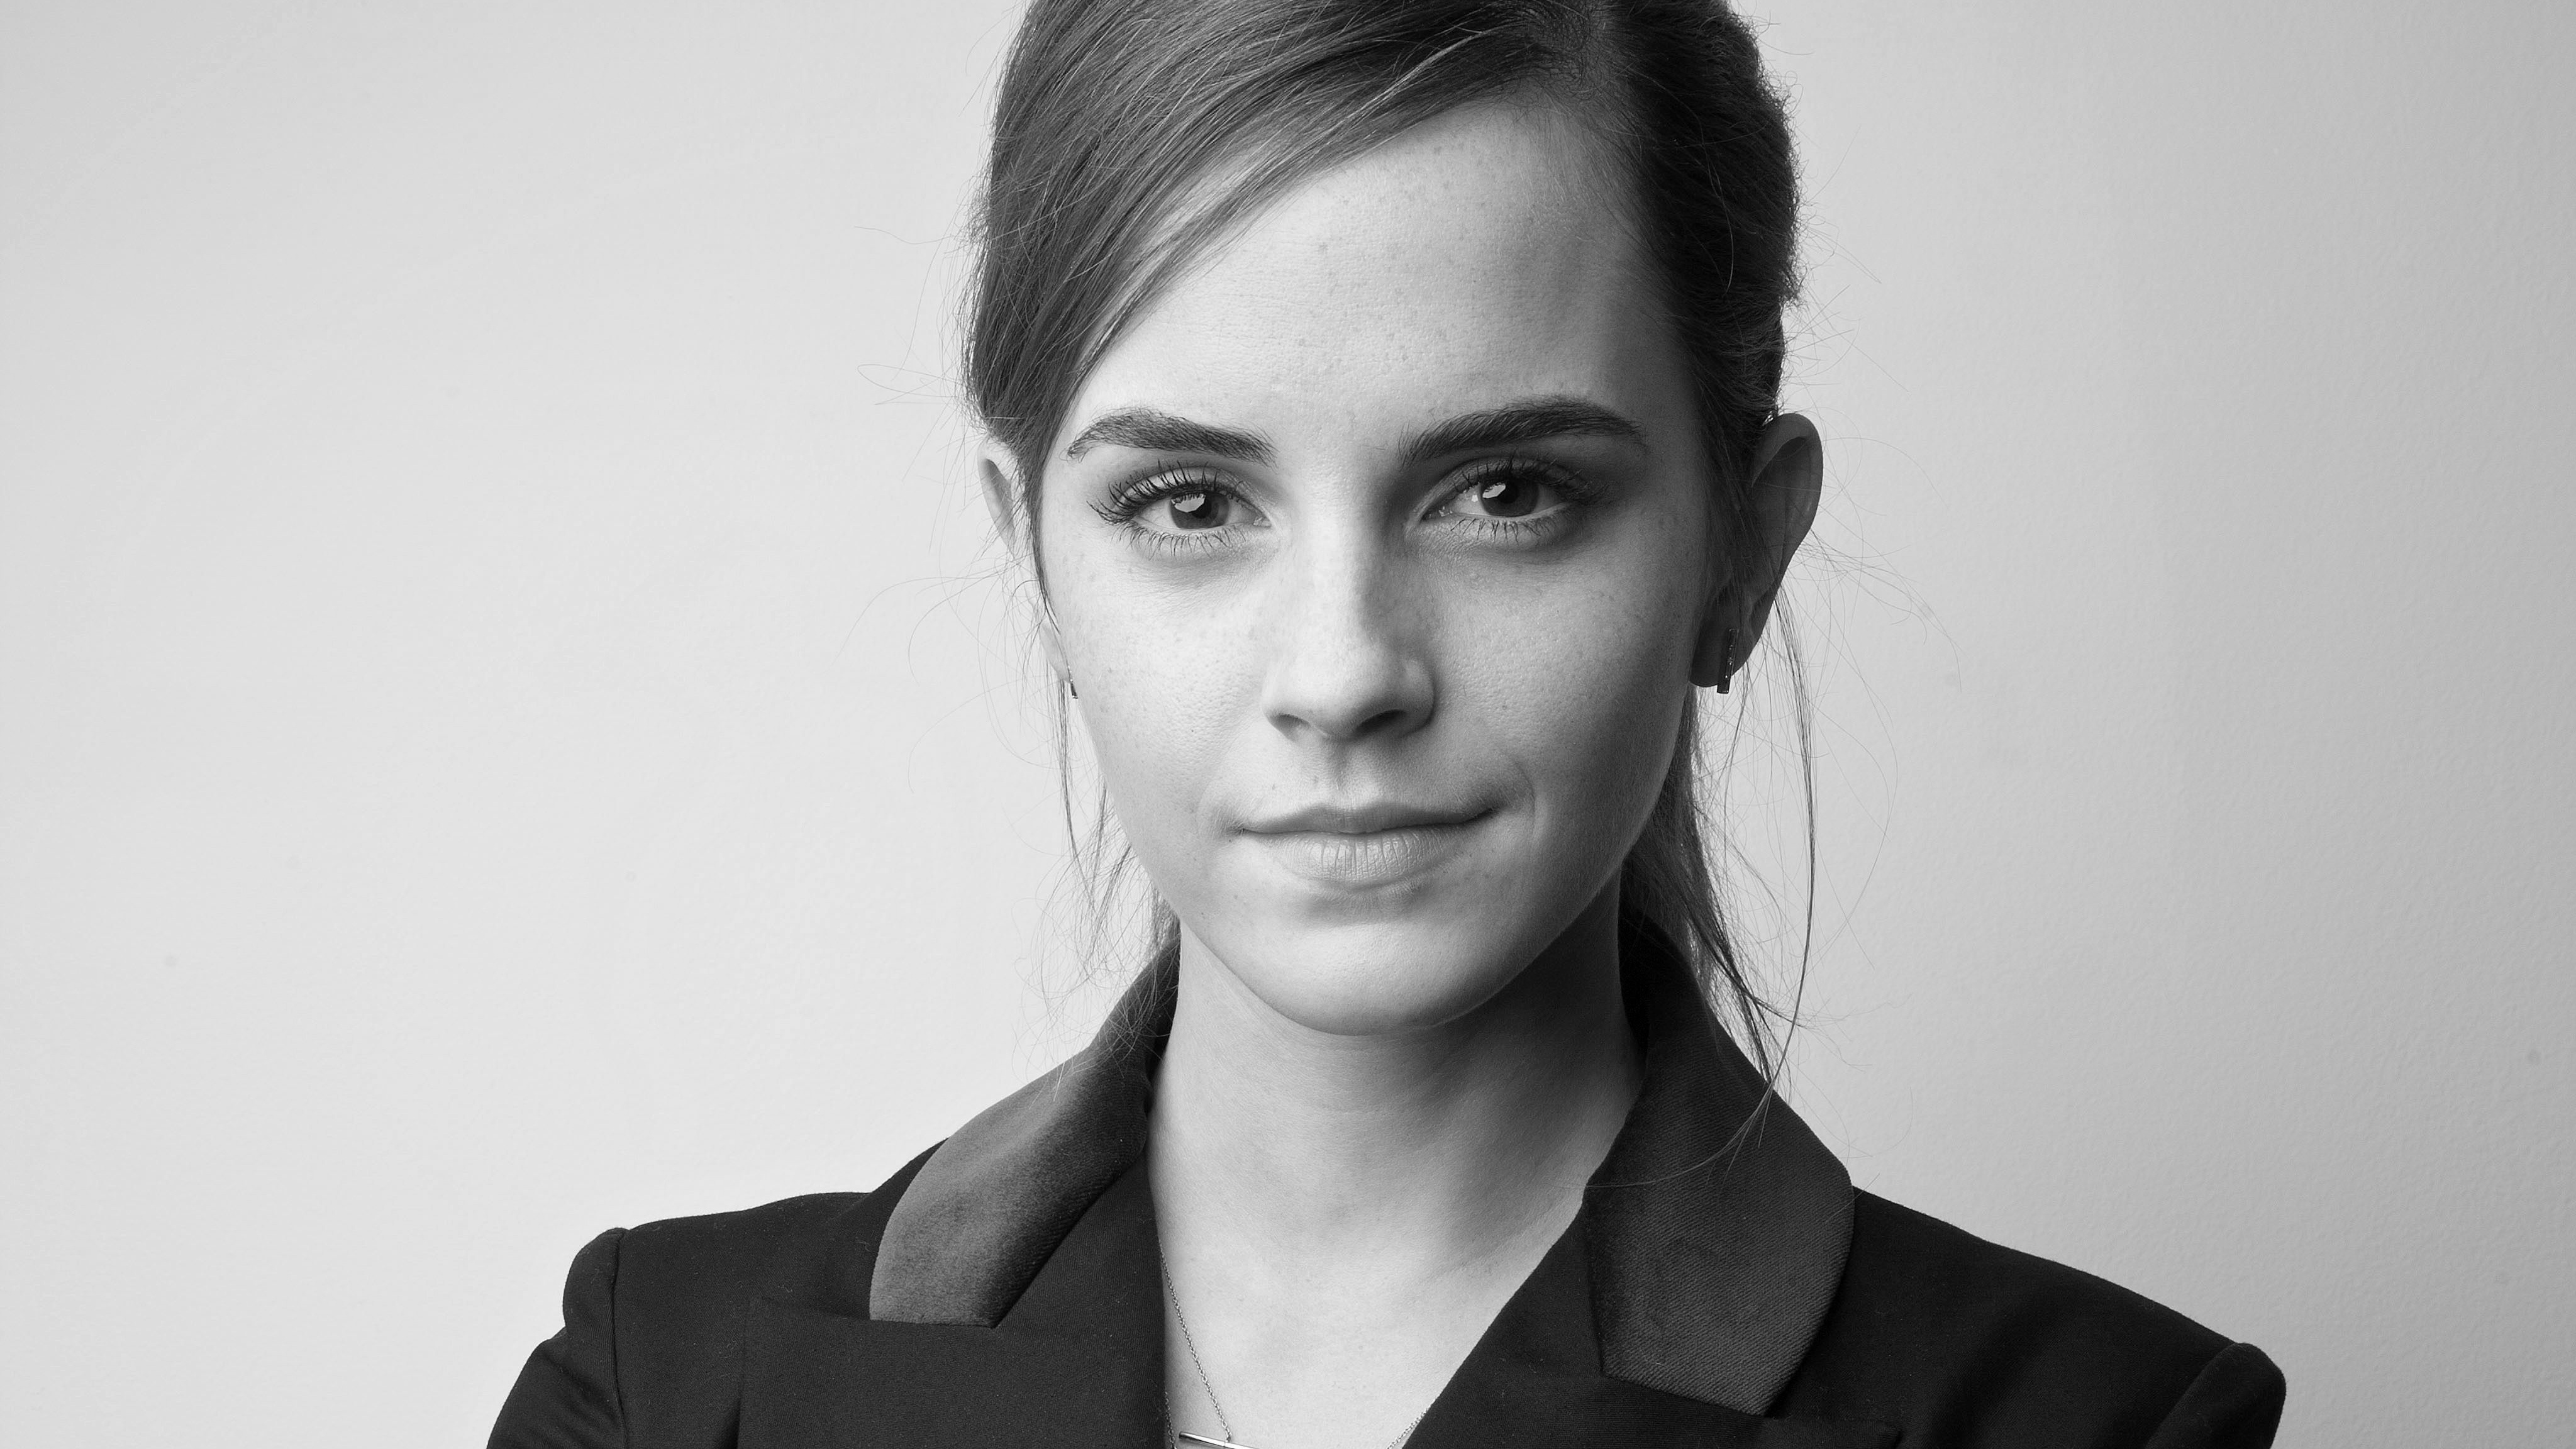 Actress Black Amp White Emma Watson English Face Girl 4096x2304